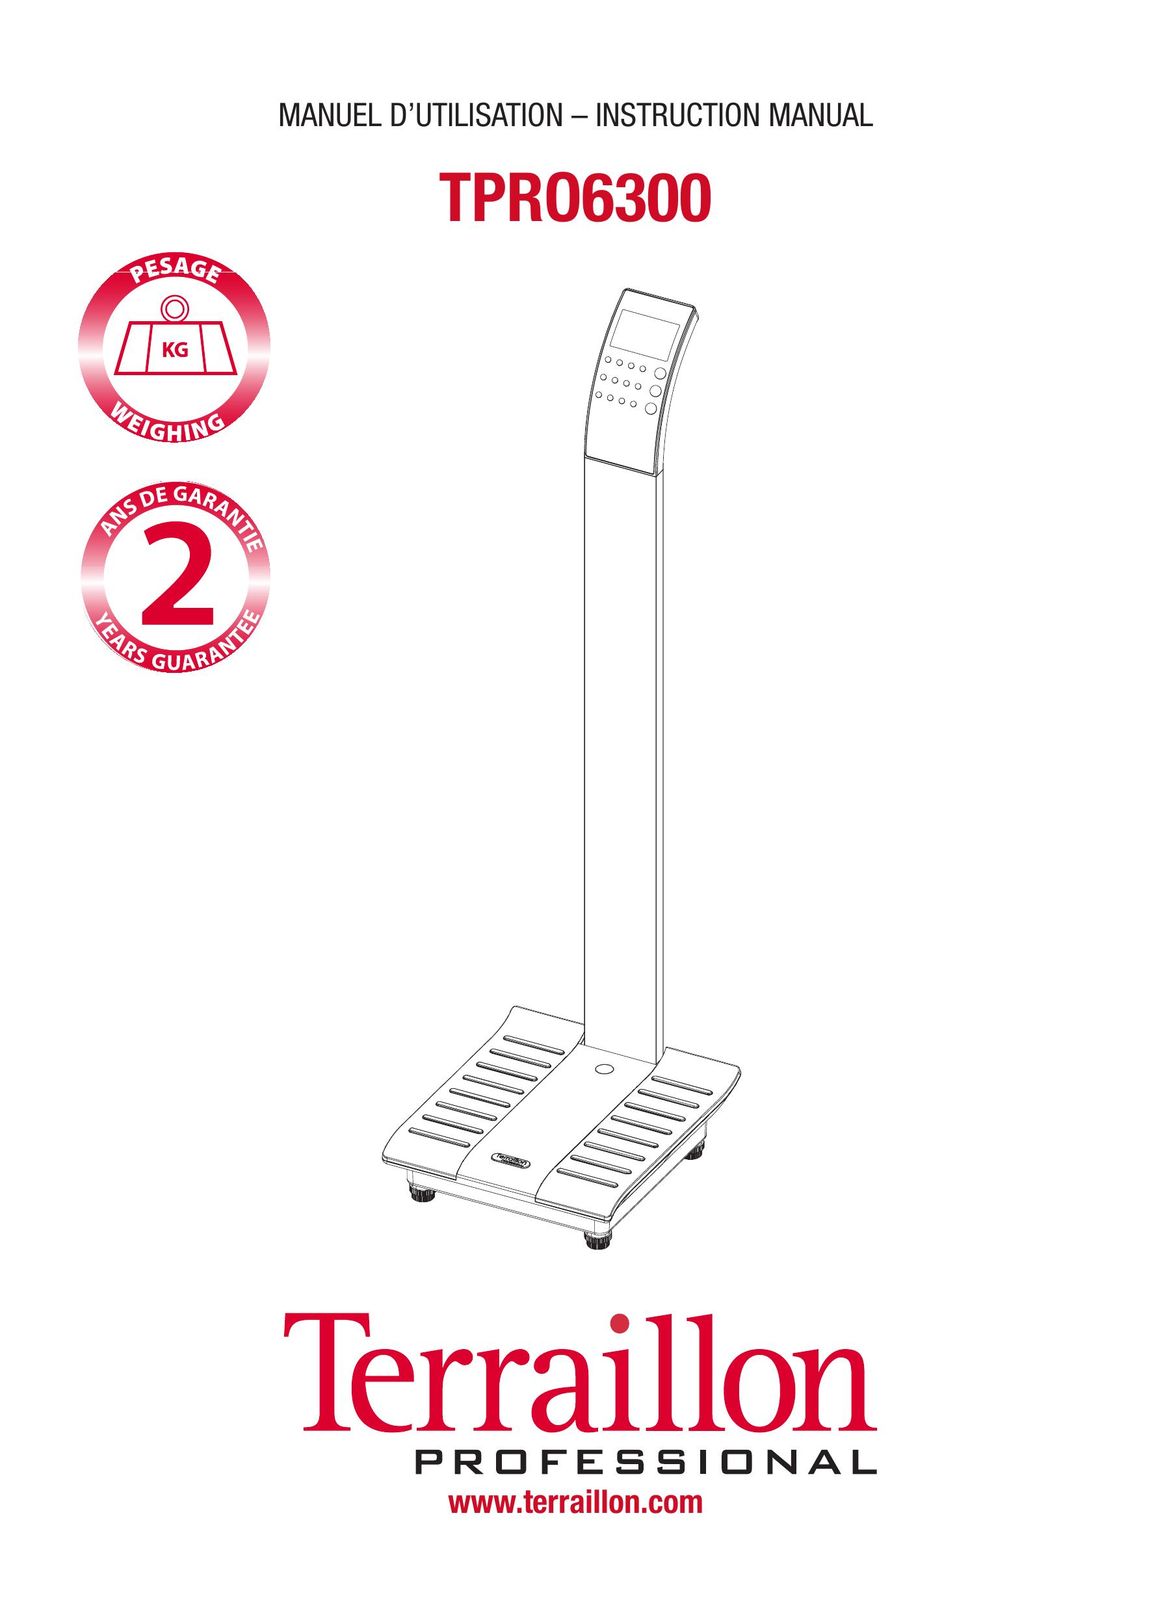 Terraillon TPRO6300 Building Set User Manual